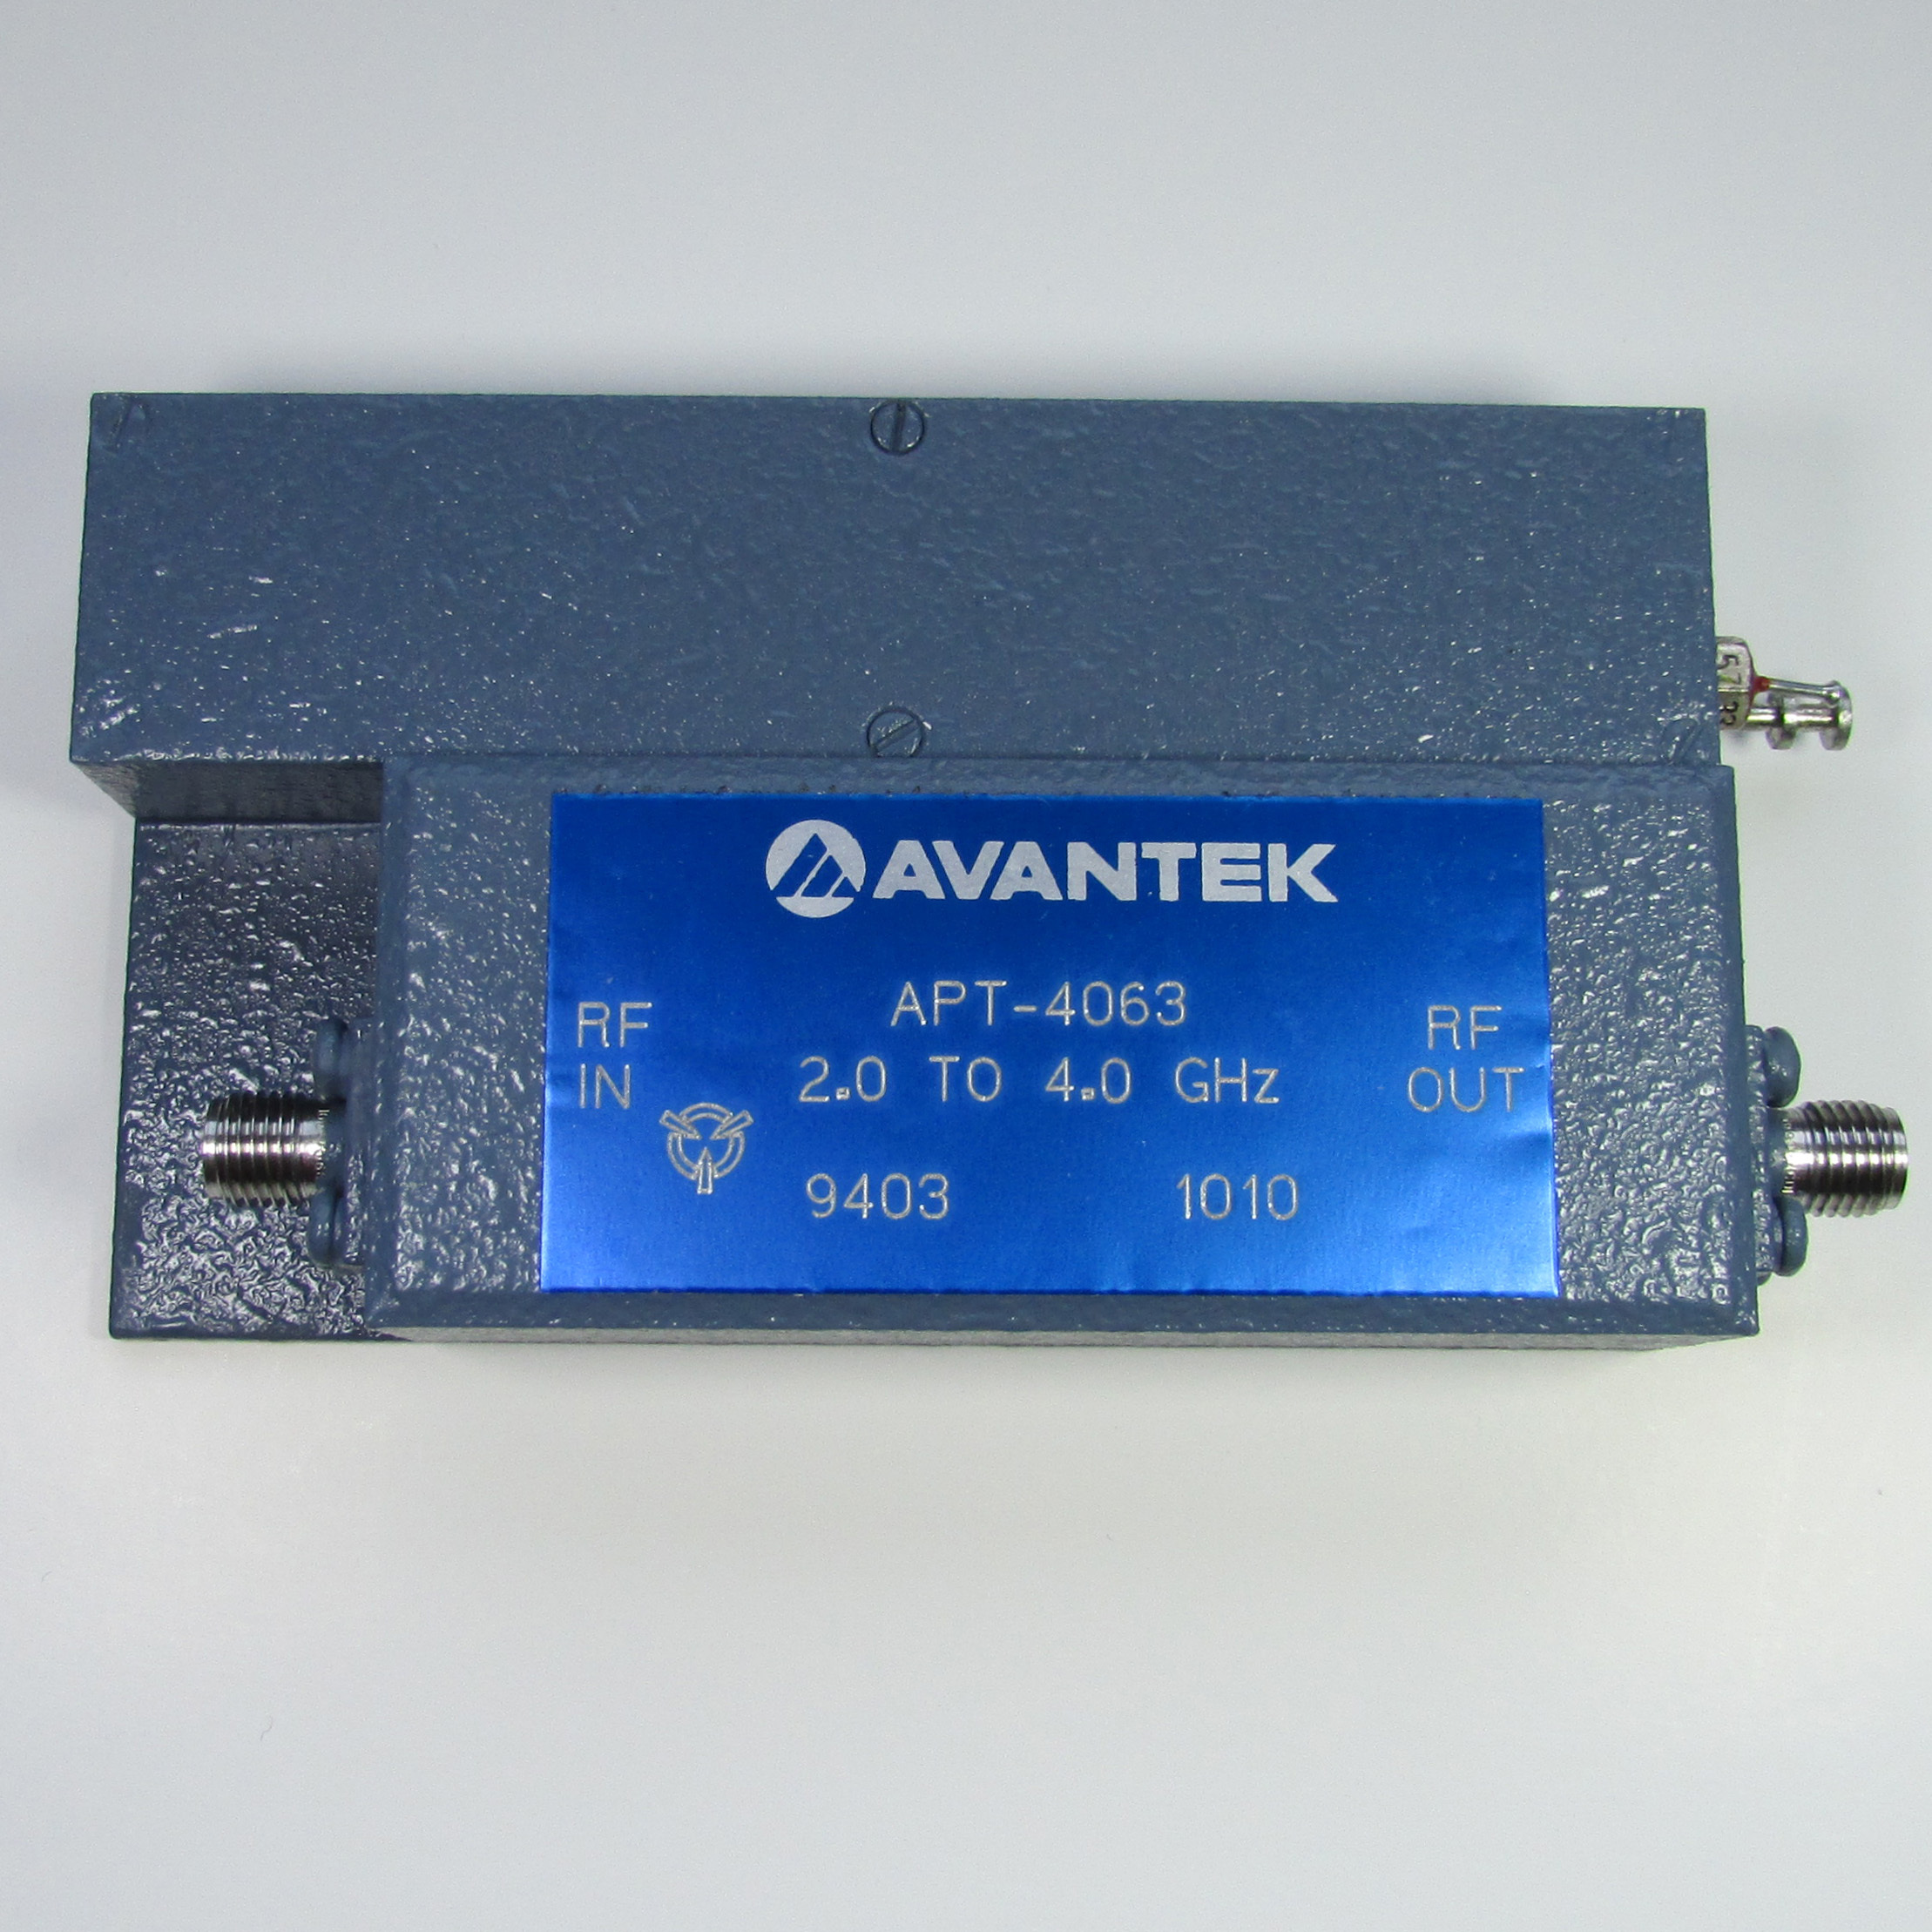 Avantek APT-4063 2-4GHz 28dB 30dBm (1W) SMA Microwave Power Amplifier